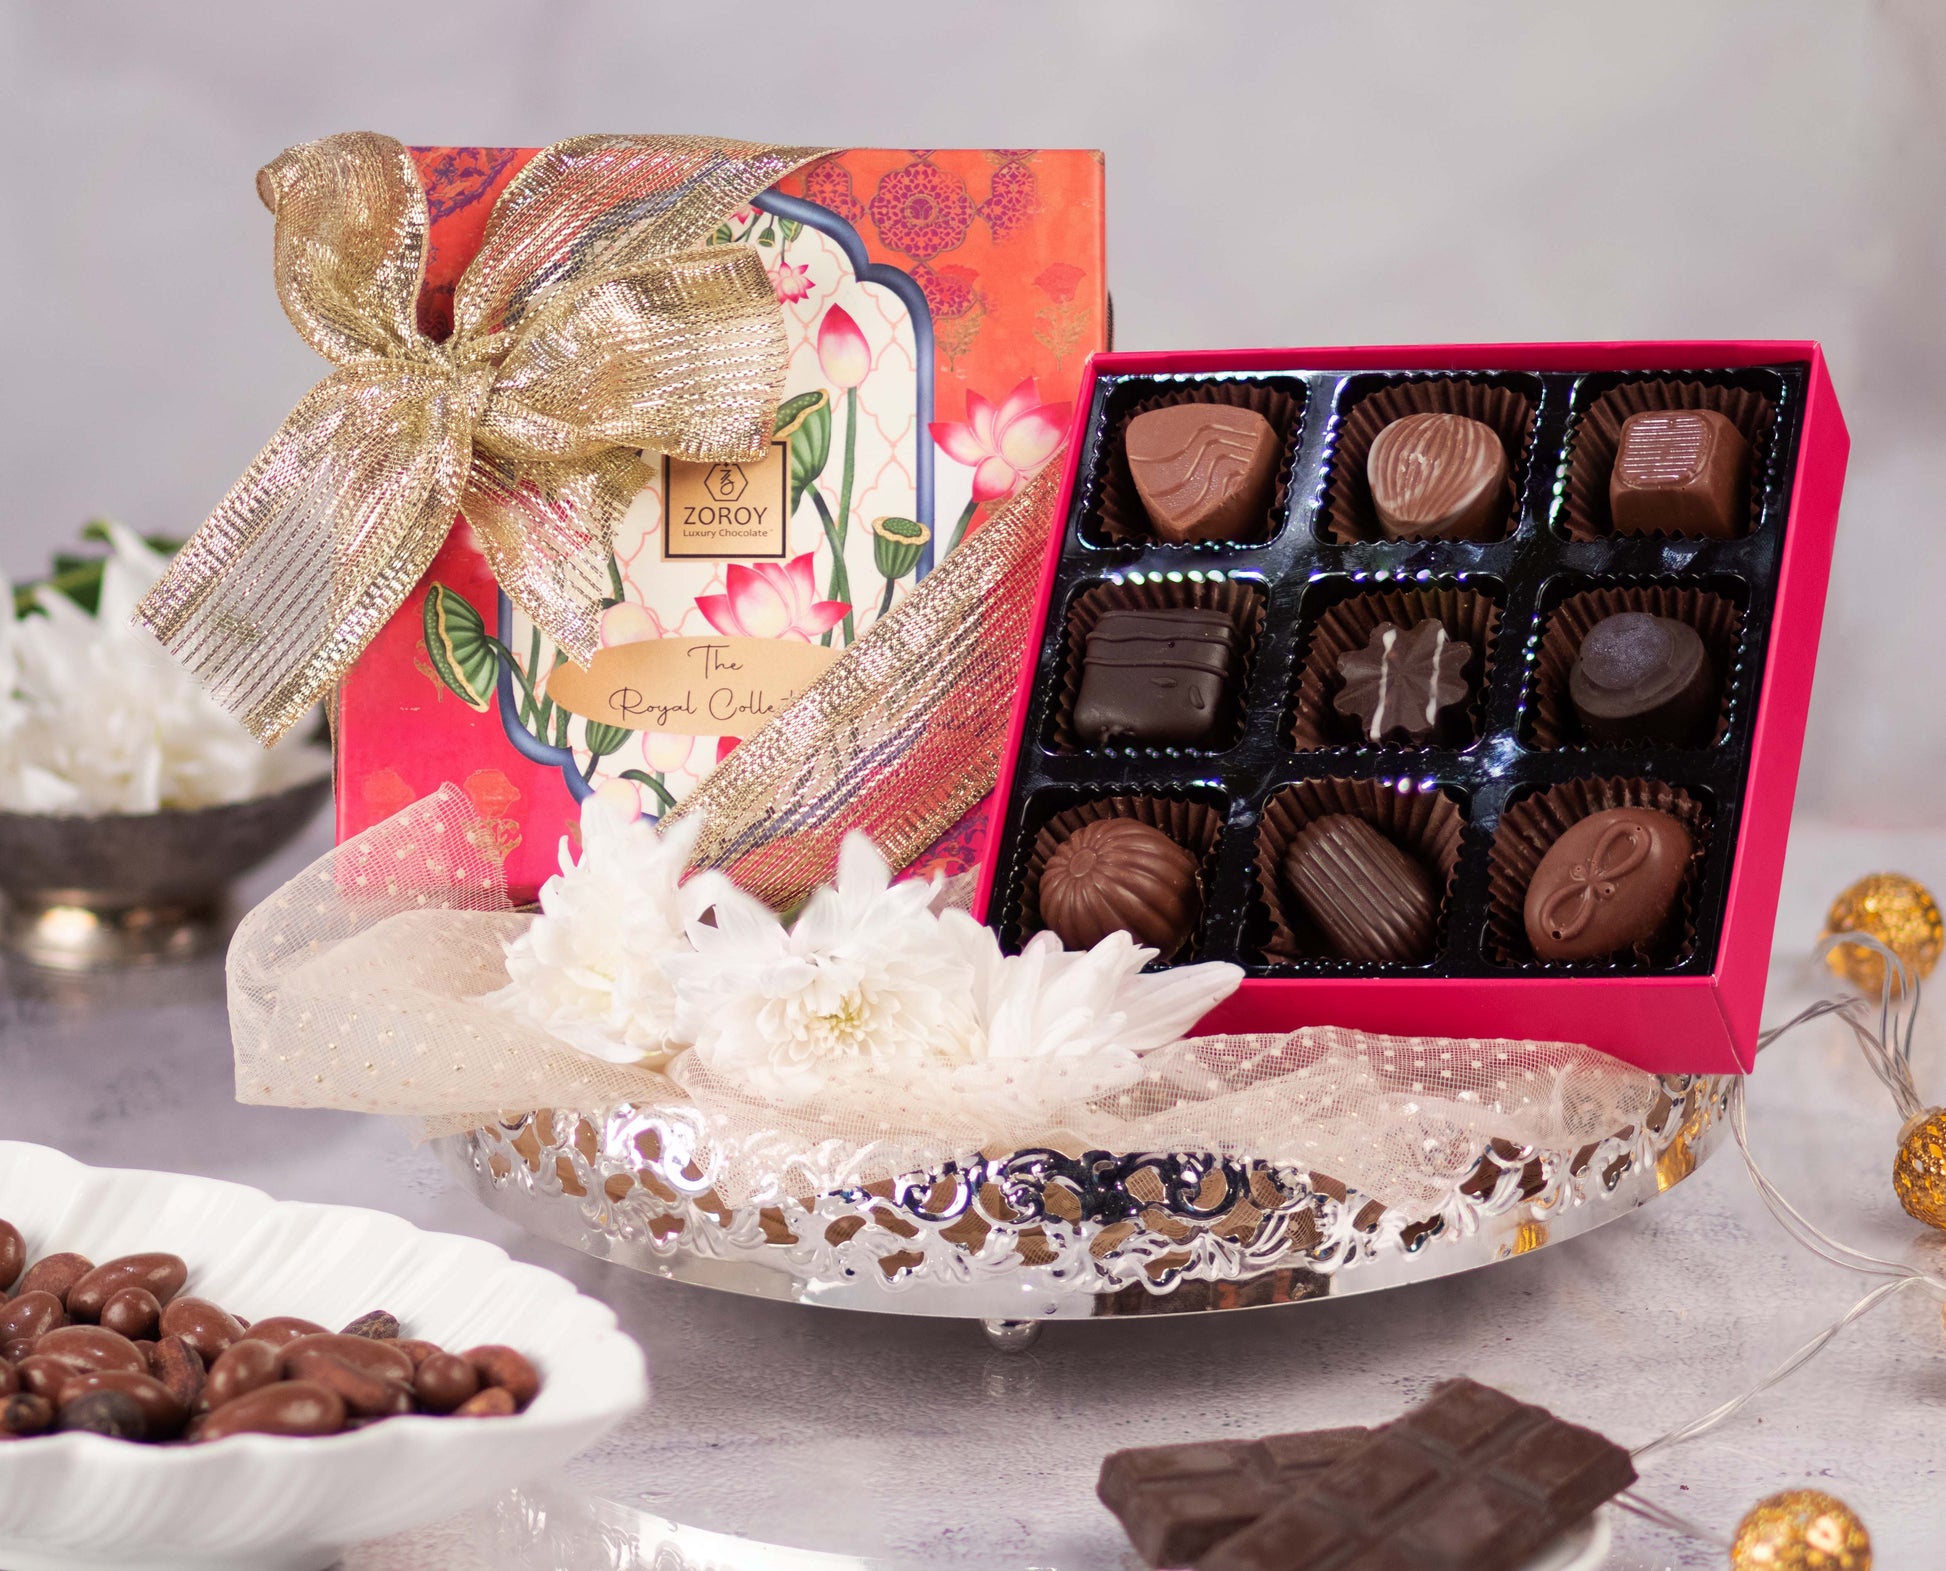 ZOROY Diwali Festive Box of 9 Assorted Chocolate